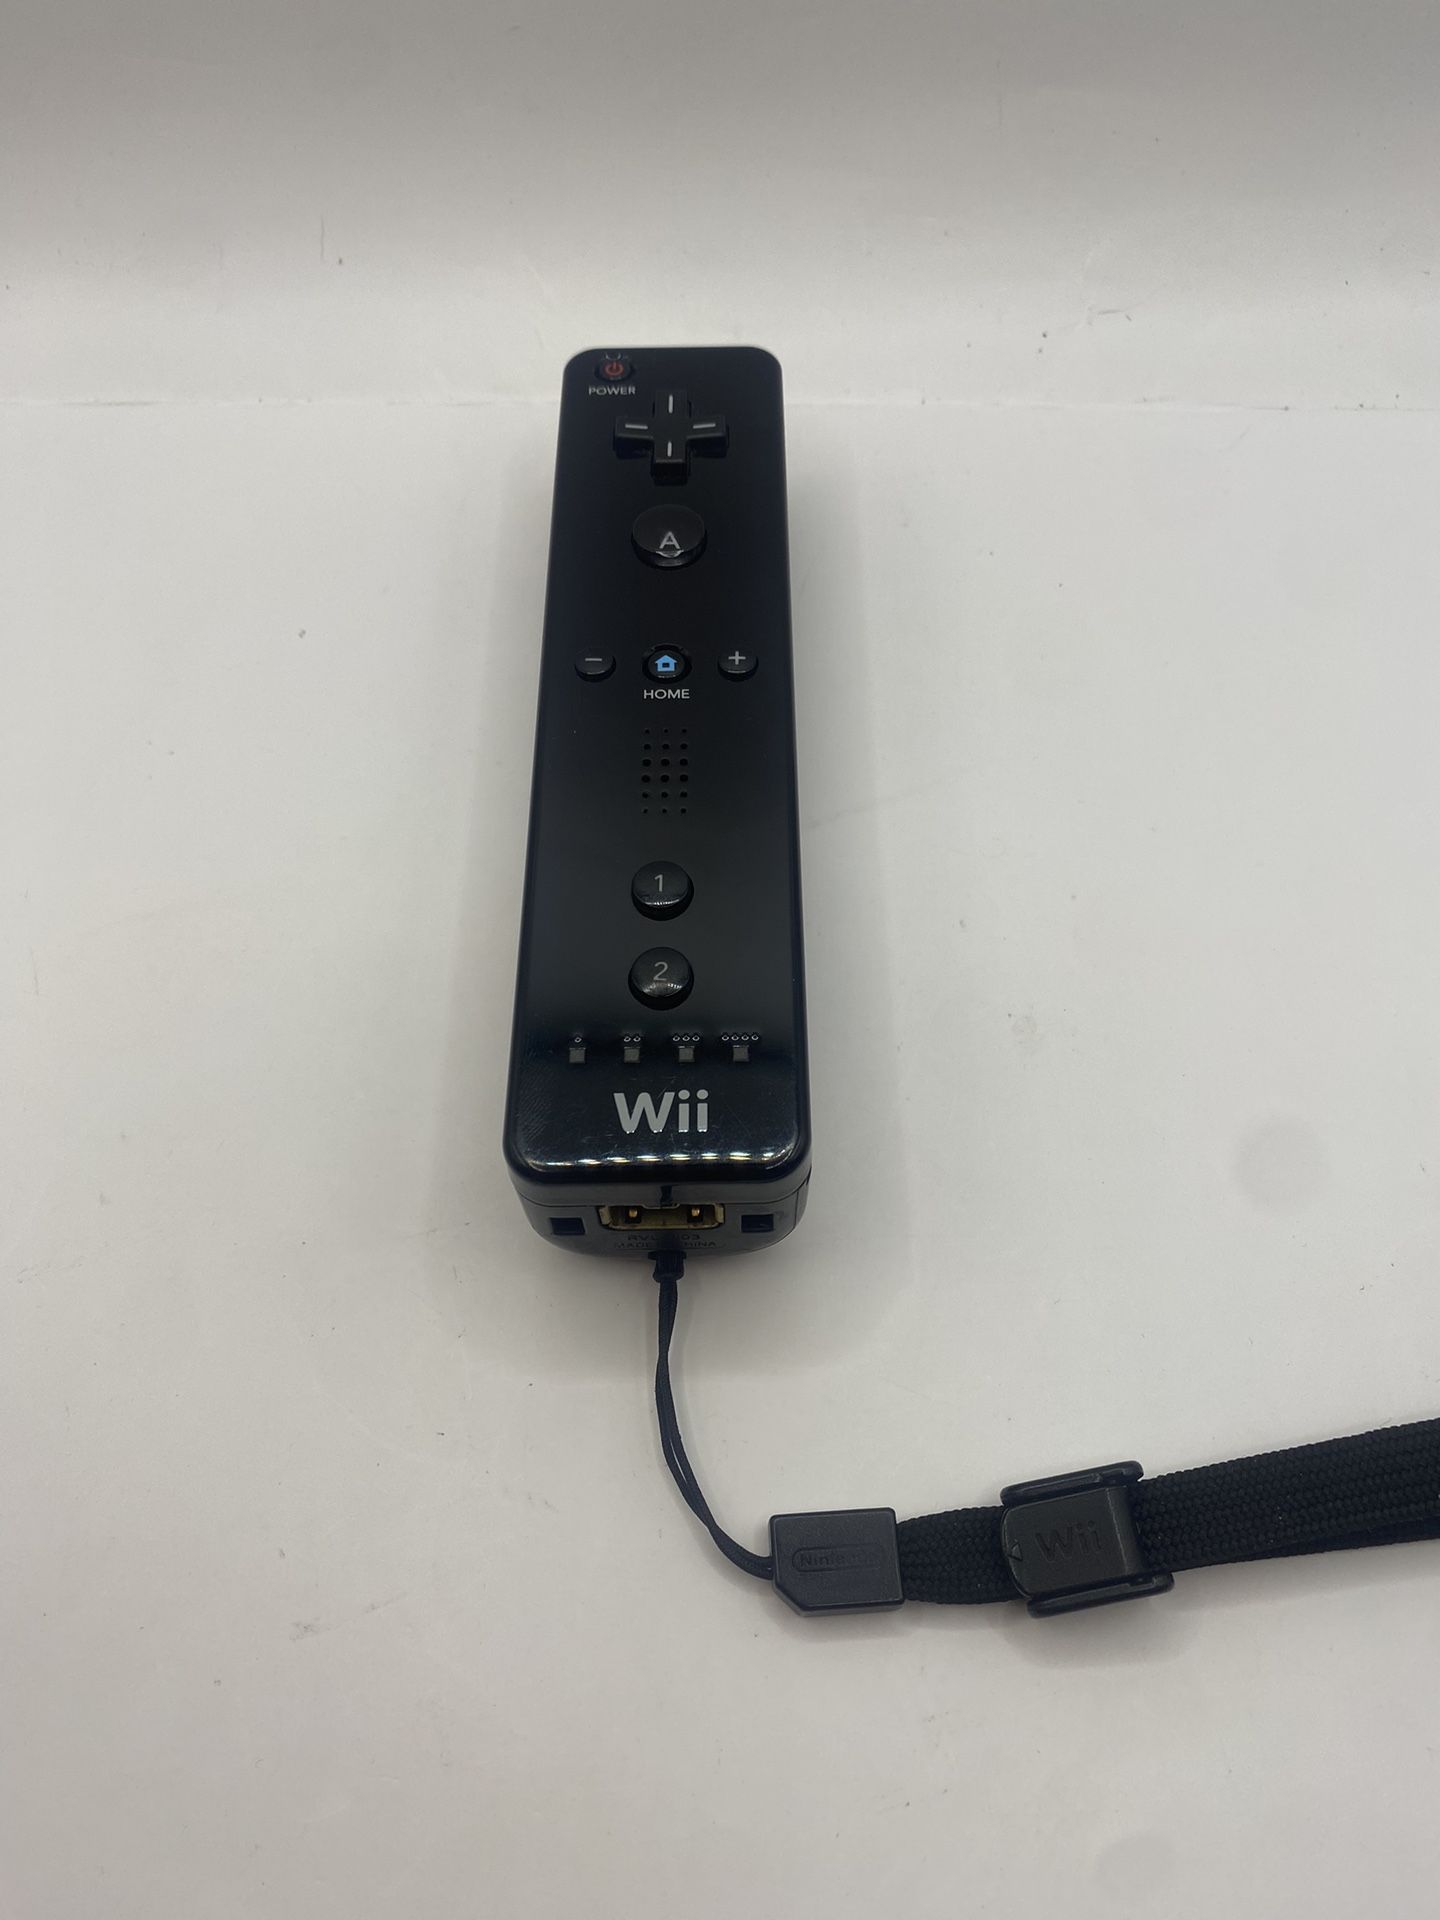 Official OEM Nintendo Wii Remote Black Controller RVL-003 Wiimote Black Wii U